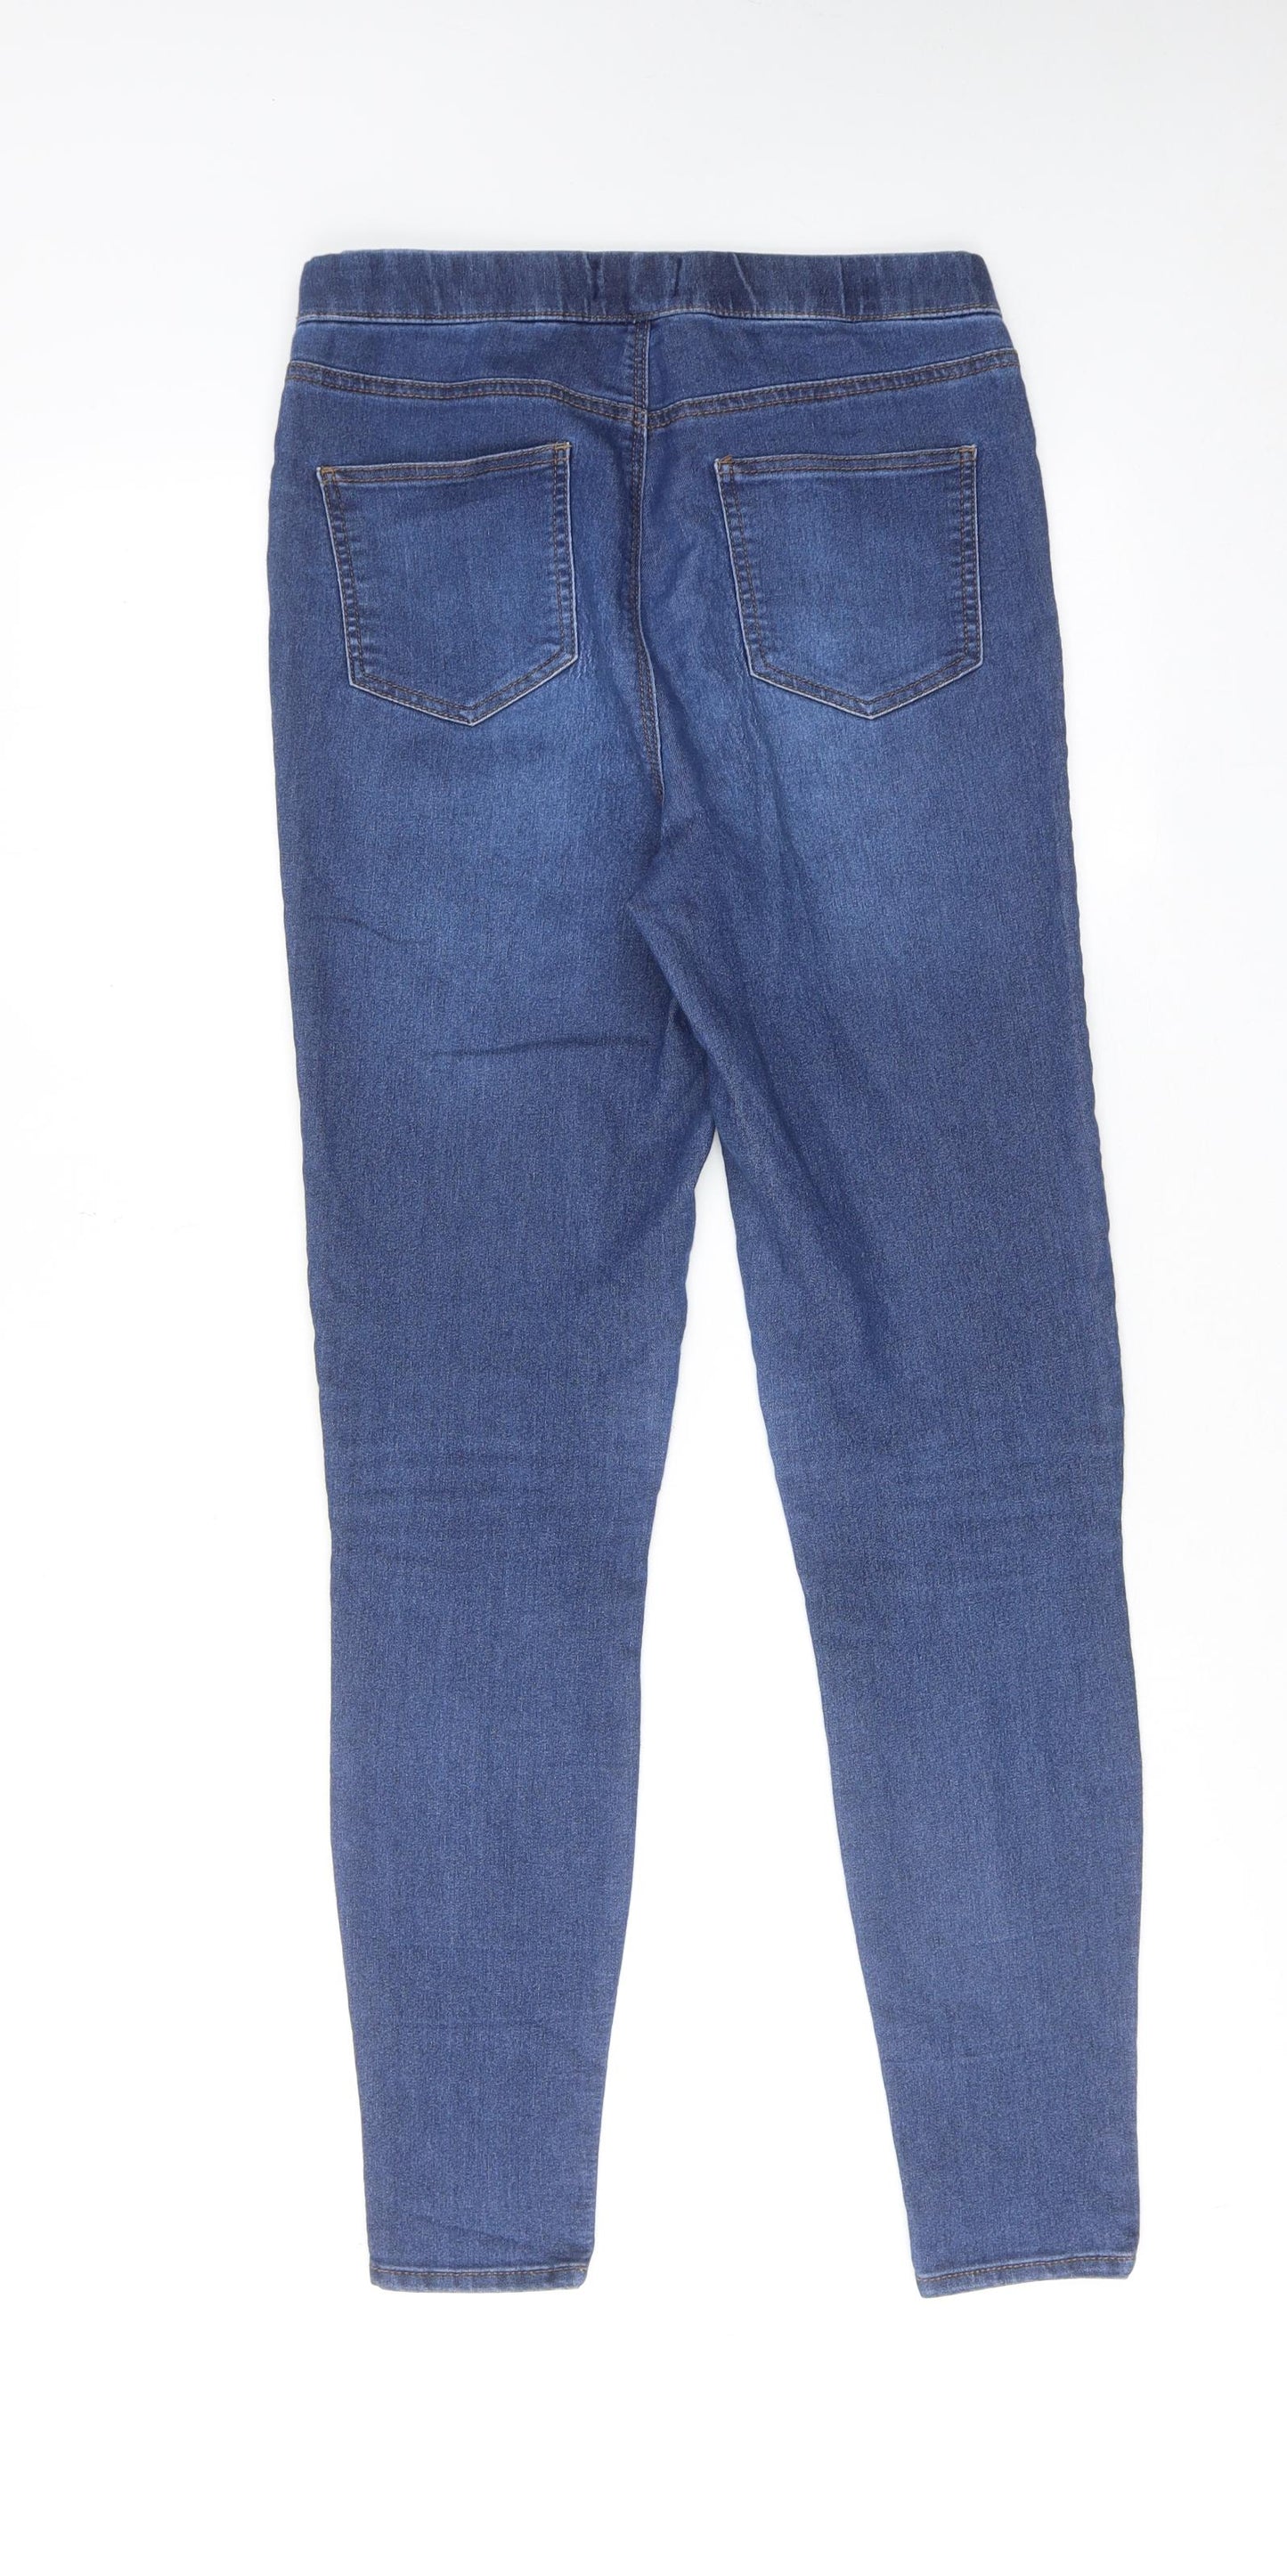 Papaya Womens Blue Cotton Jegging Jeans Size 8 Regular